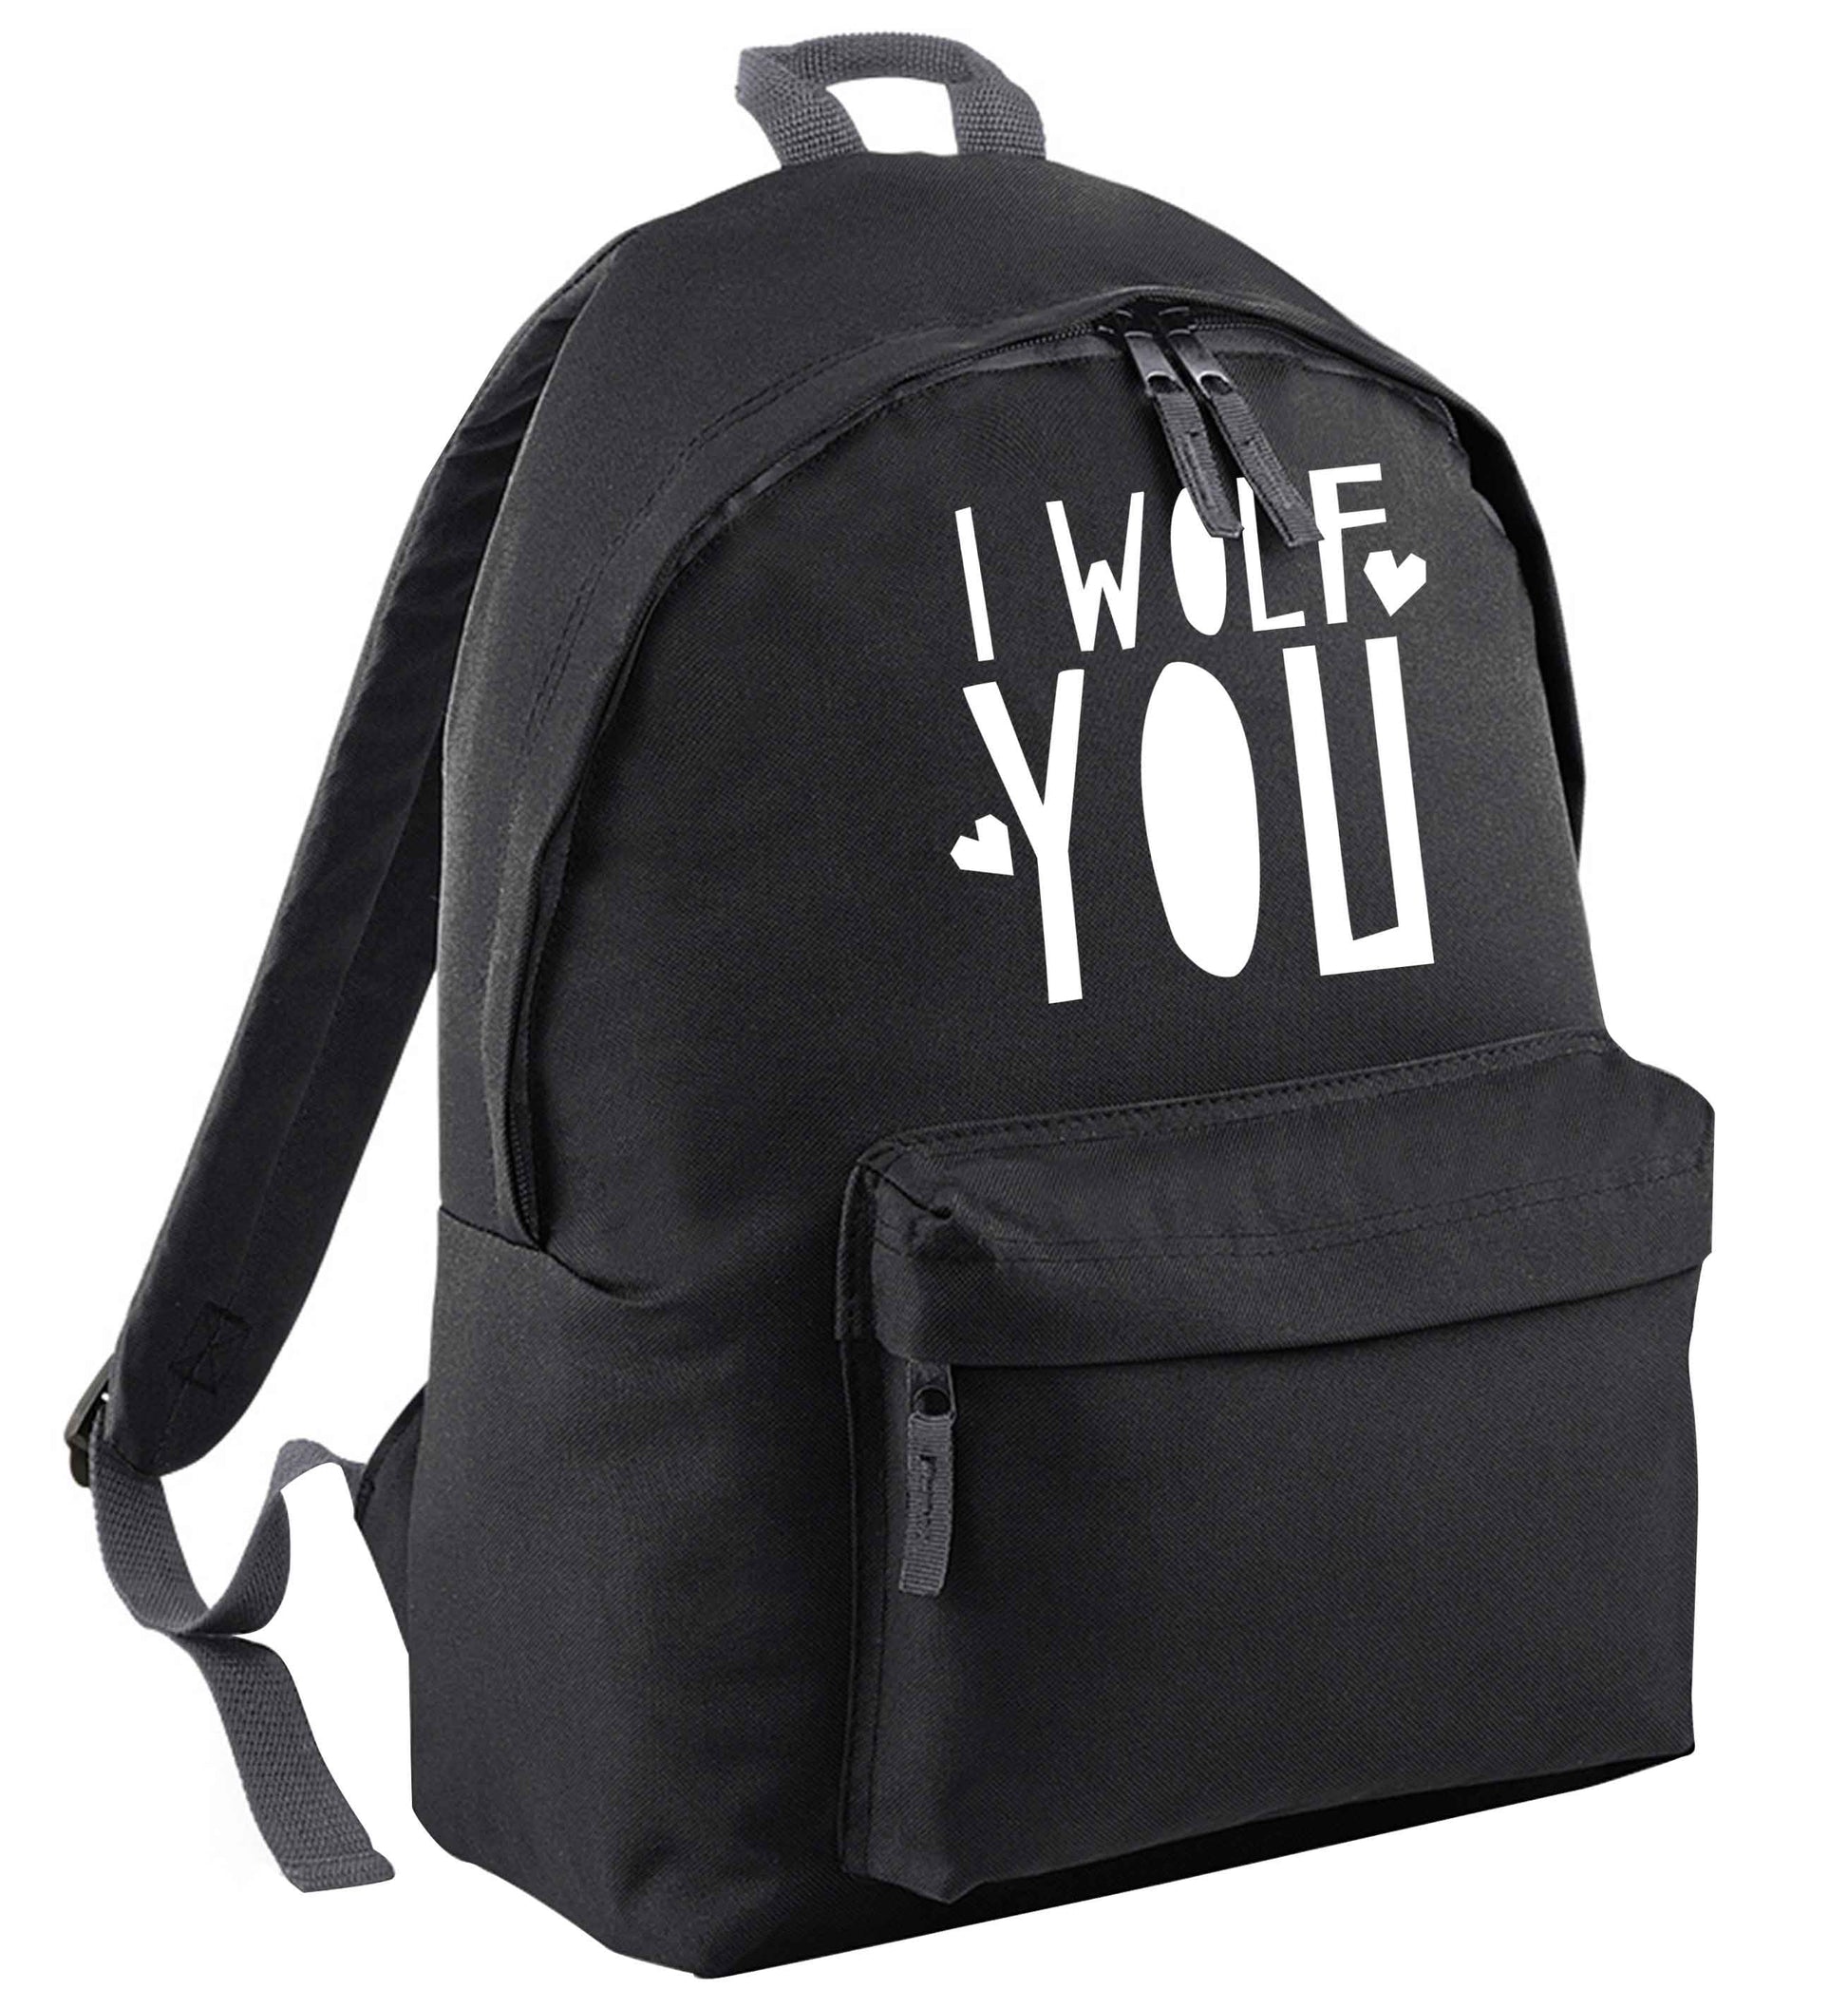 I wolf you black adults backpack